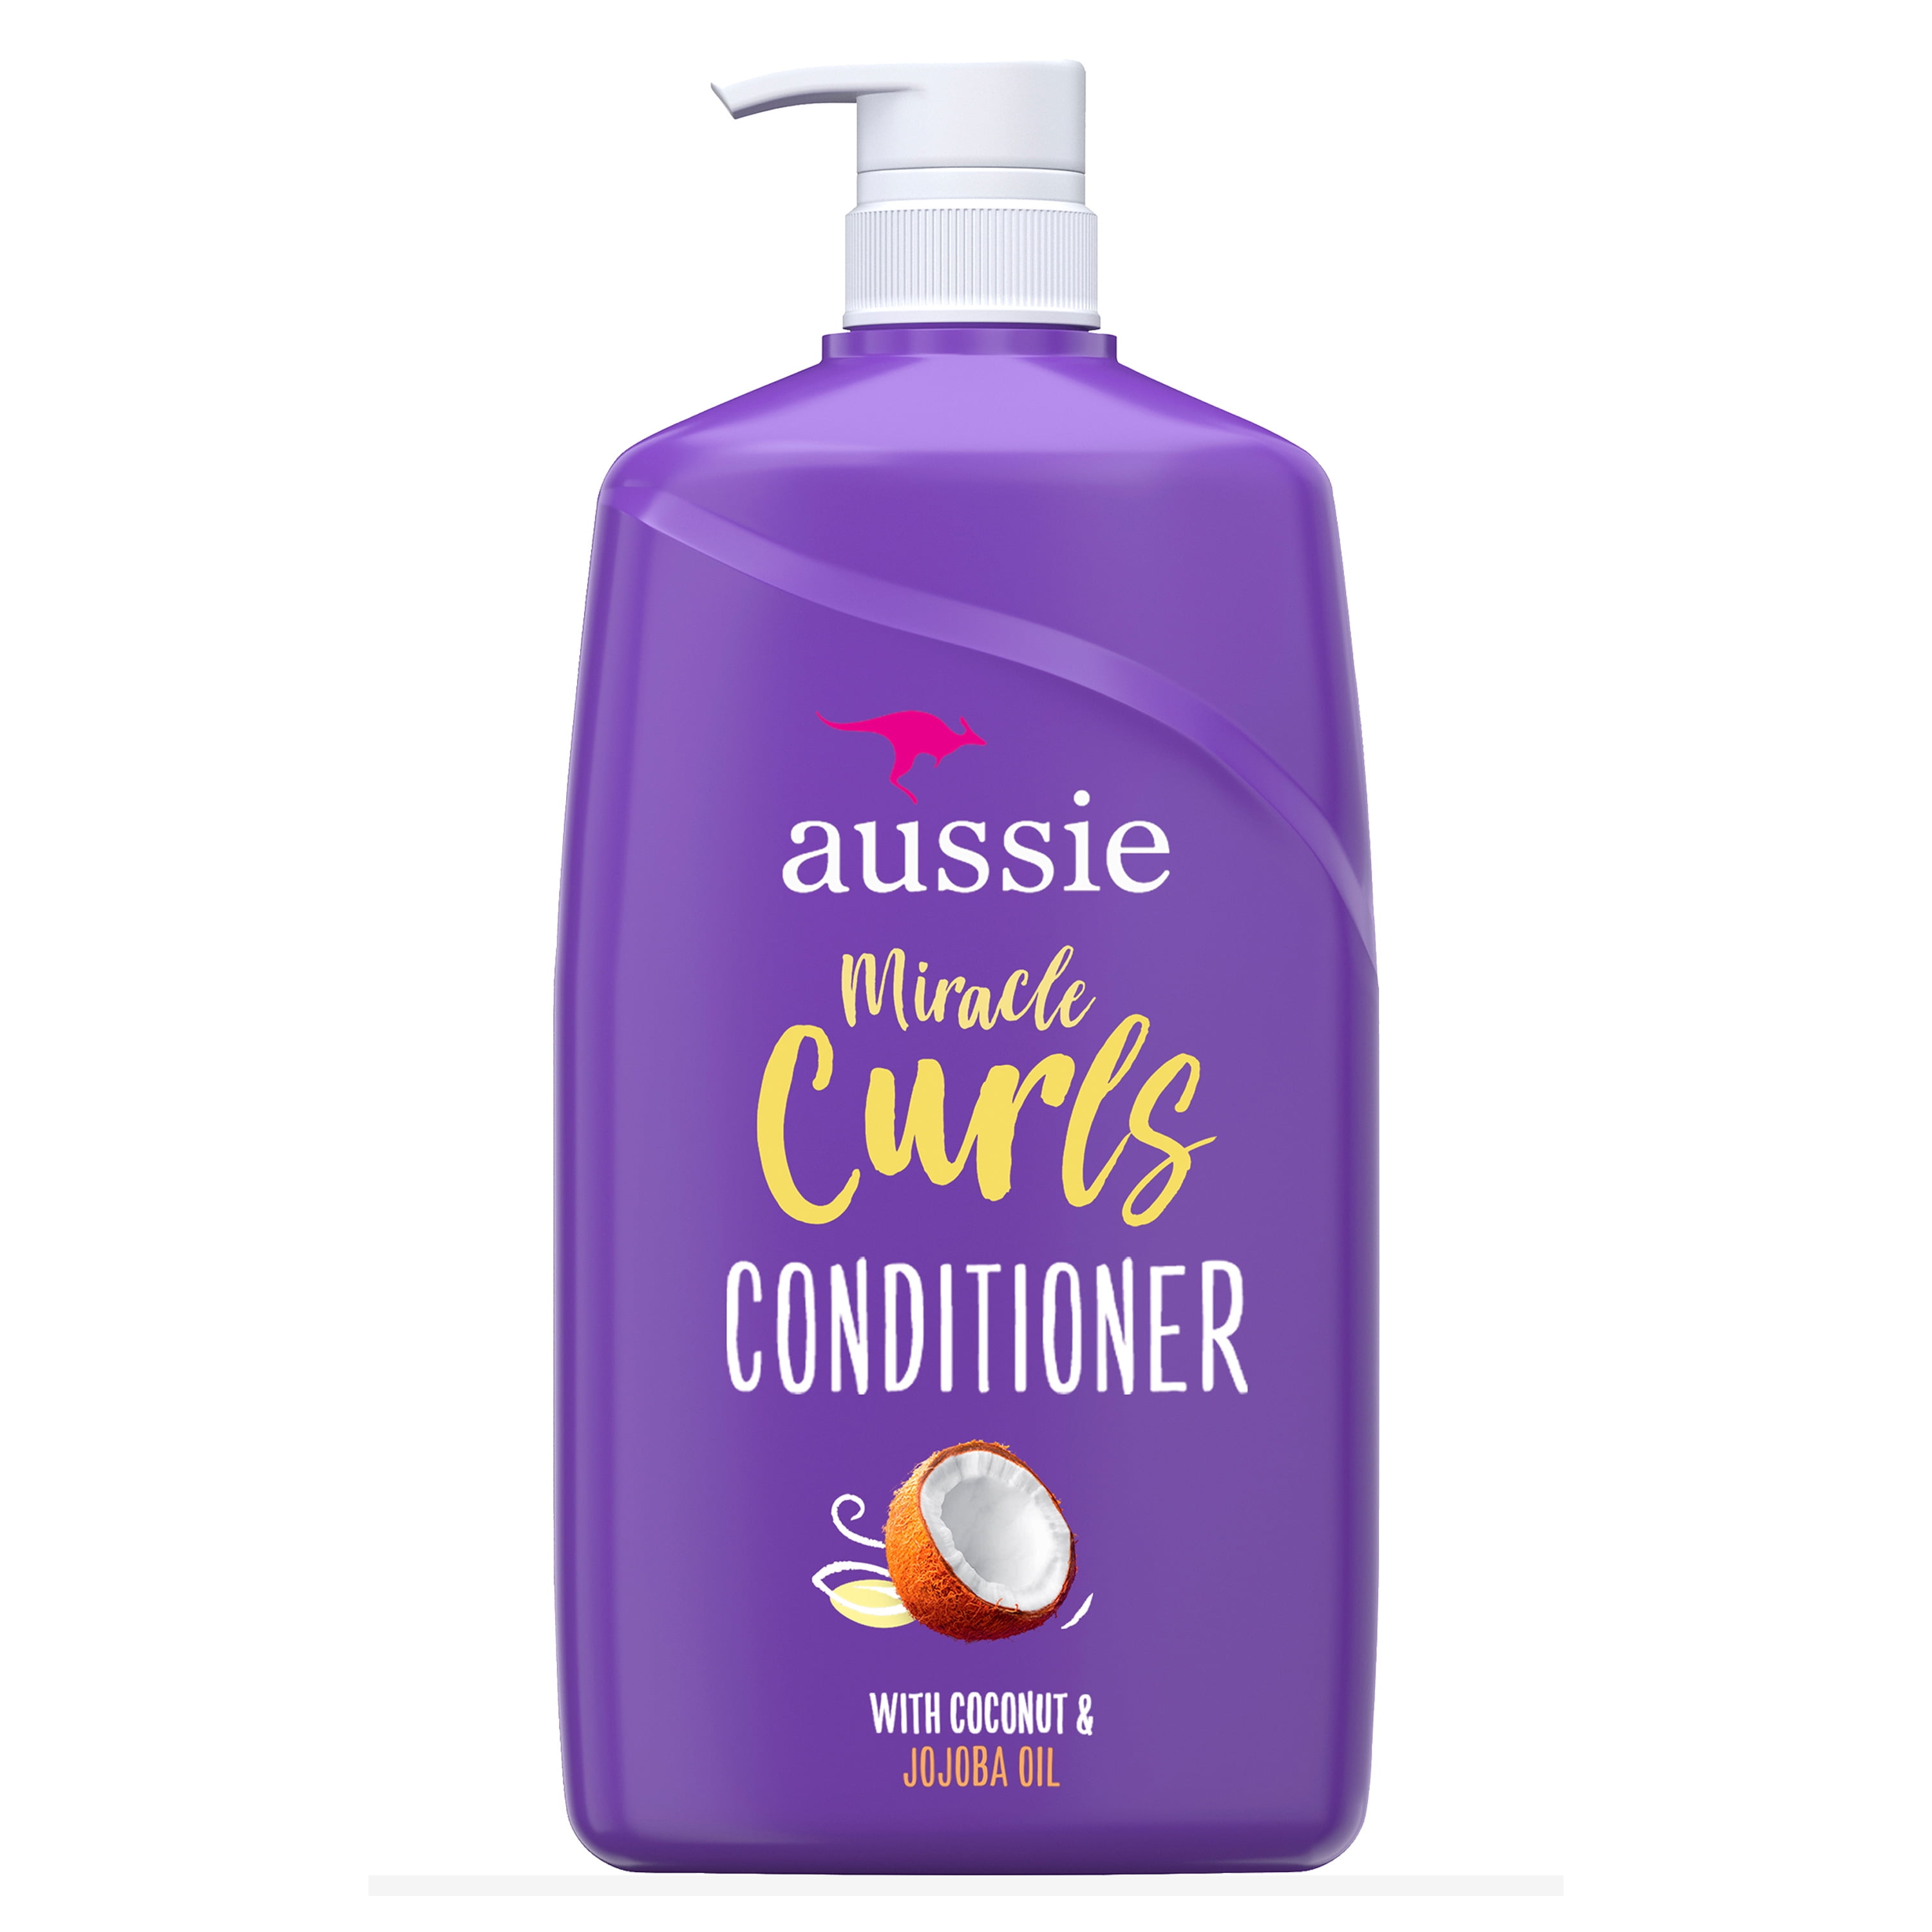 Curls conditioner. Aussie Miracle Curls Conditioner"..